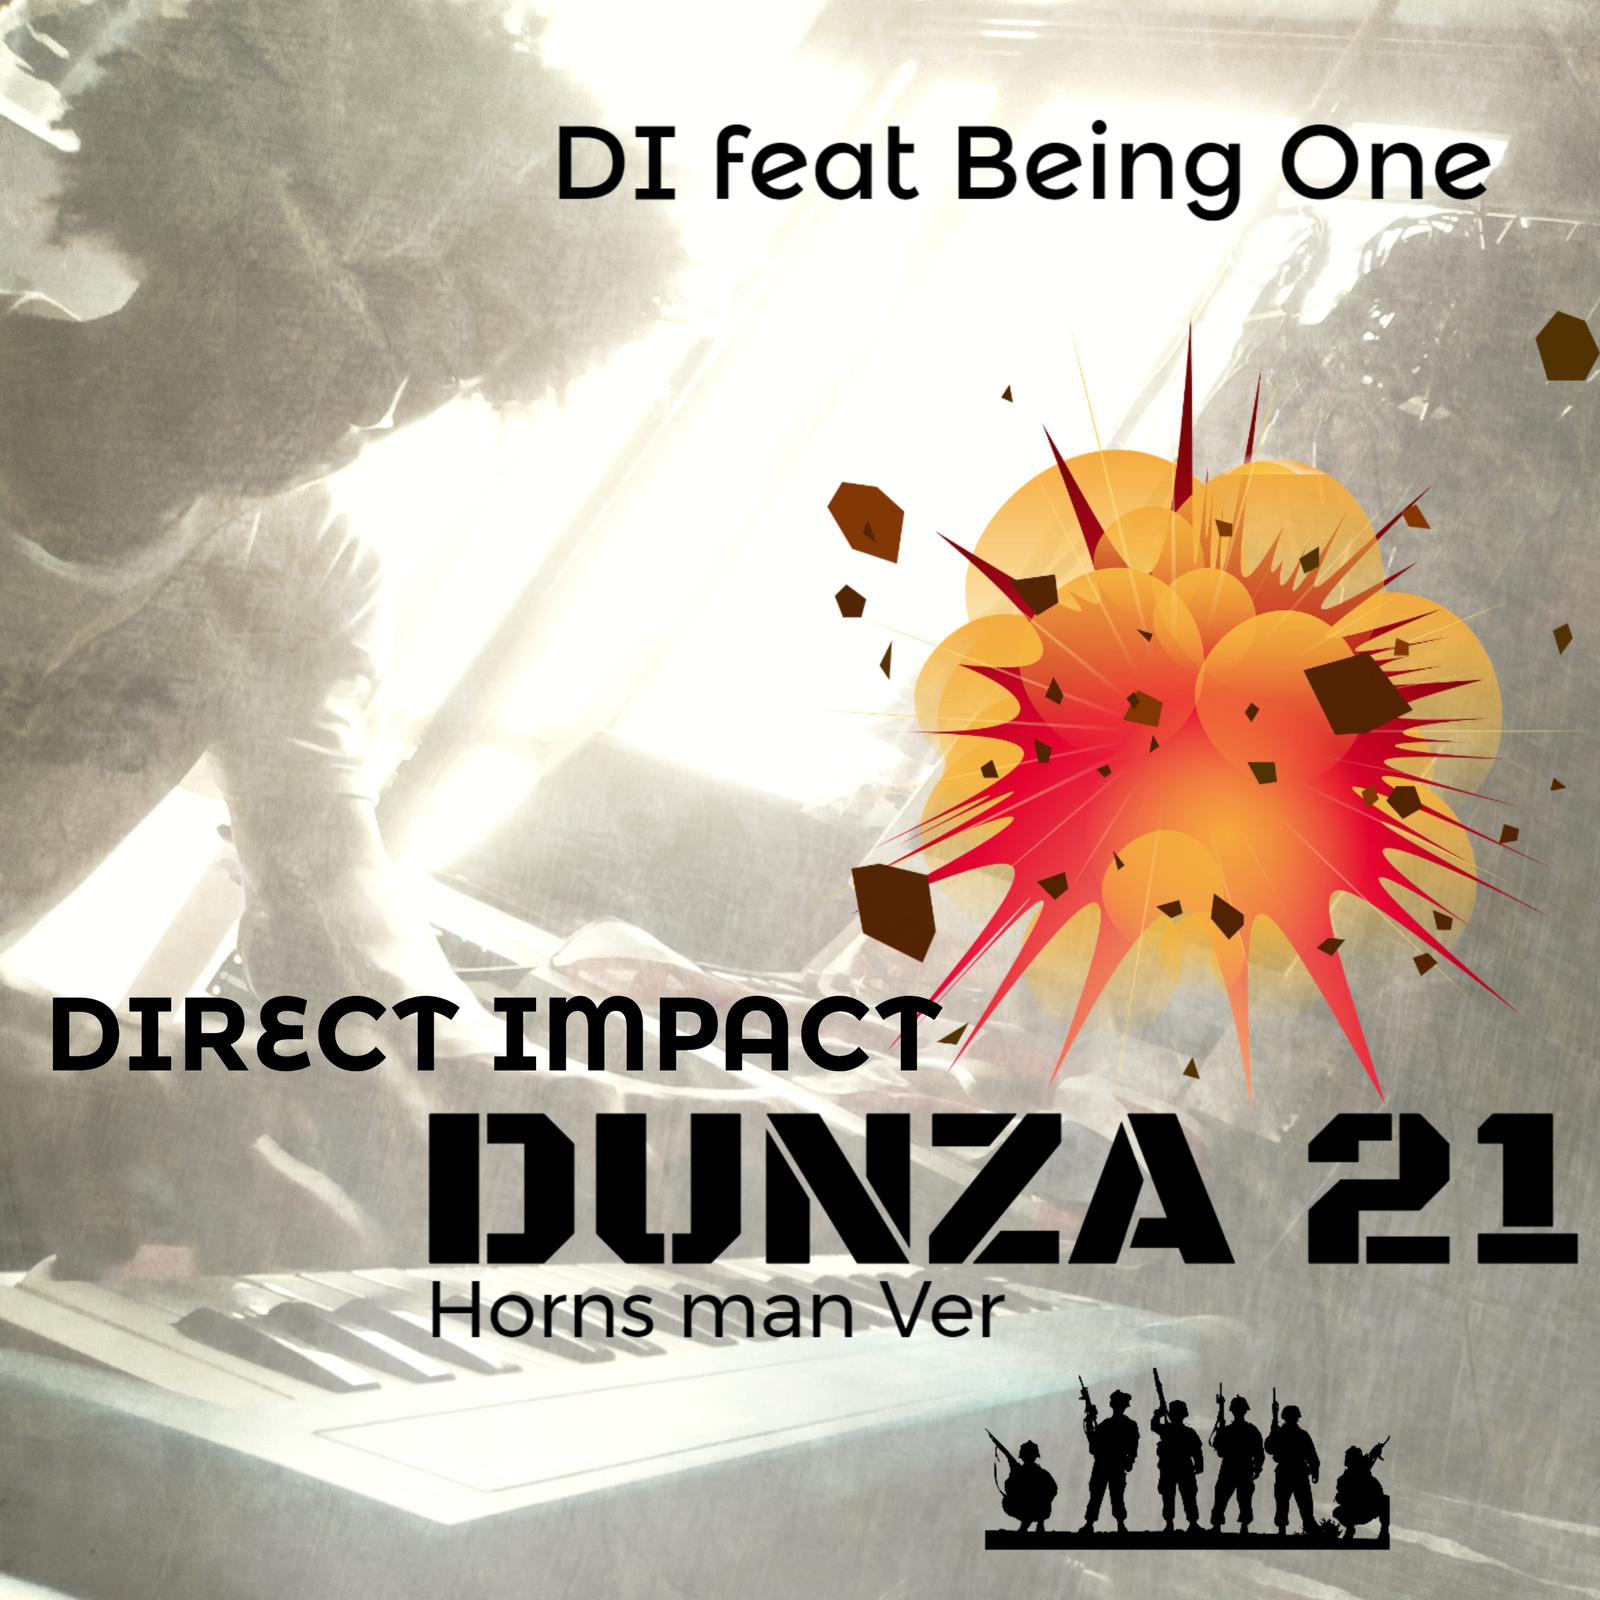 Direct Impact - DUNZA 21 (feat. Being One) [Hornsman Ver]